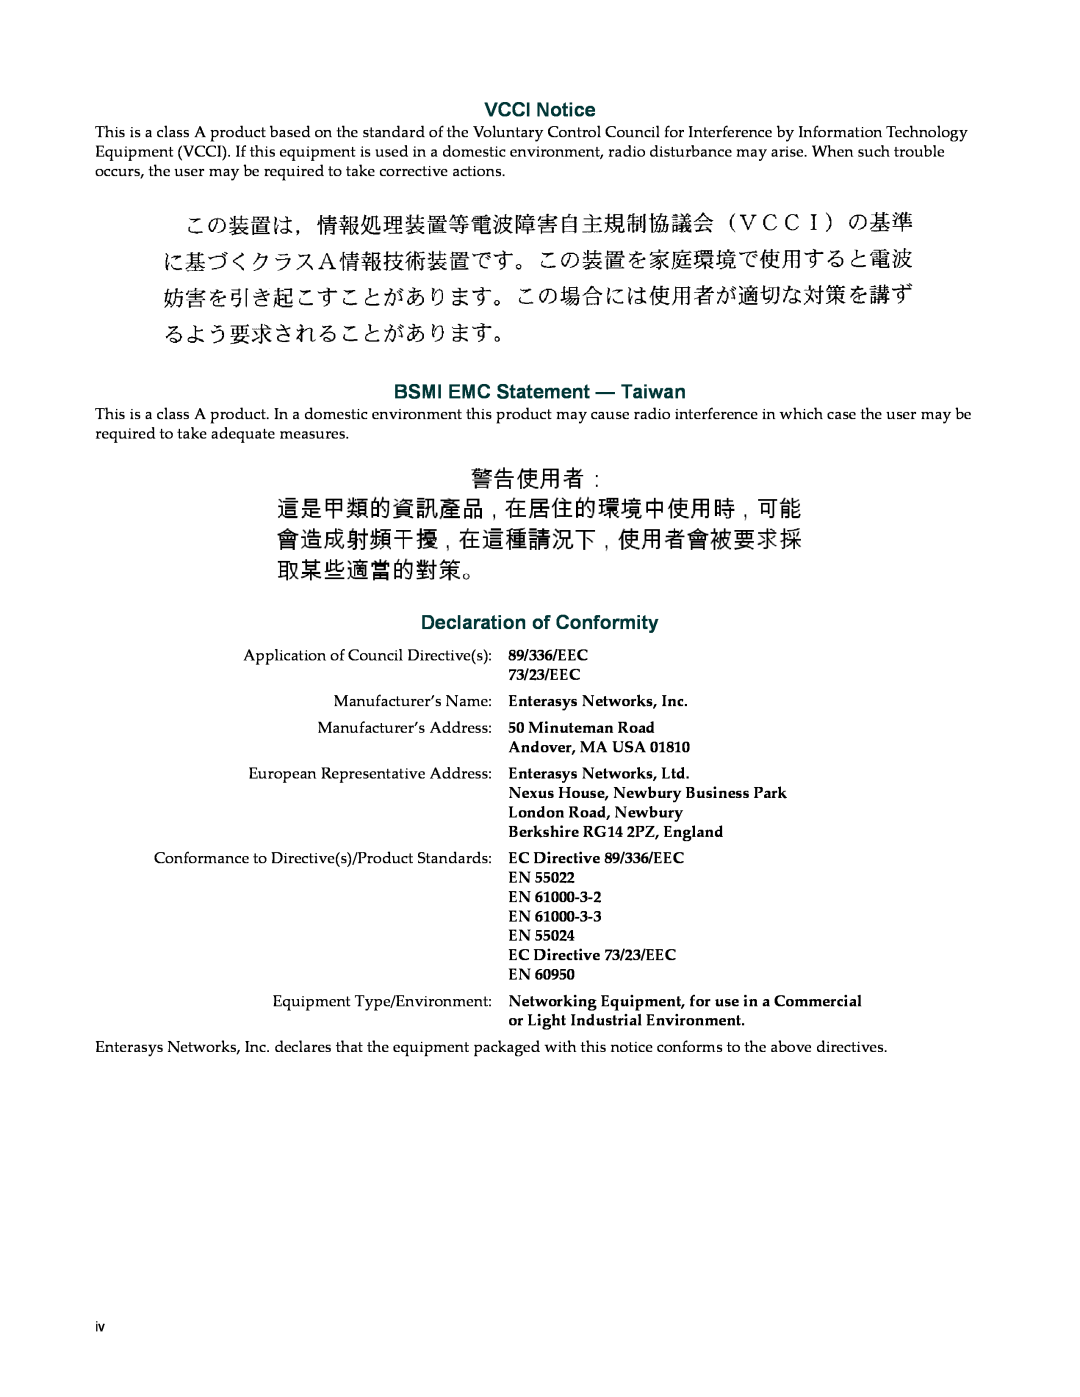 Enterasys Networks RBT-8110 manual VCCI Notice, BSMI EMC Statement - Taiwan, Declaration of Conformity, Andover, MA USA 